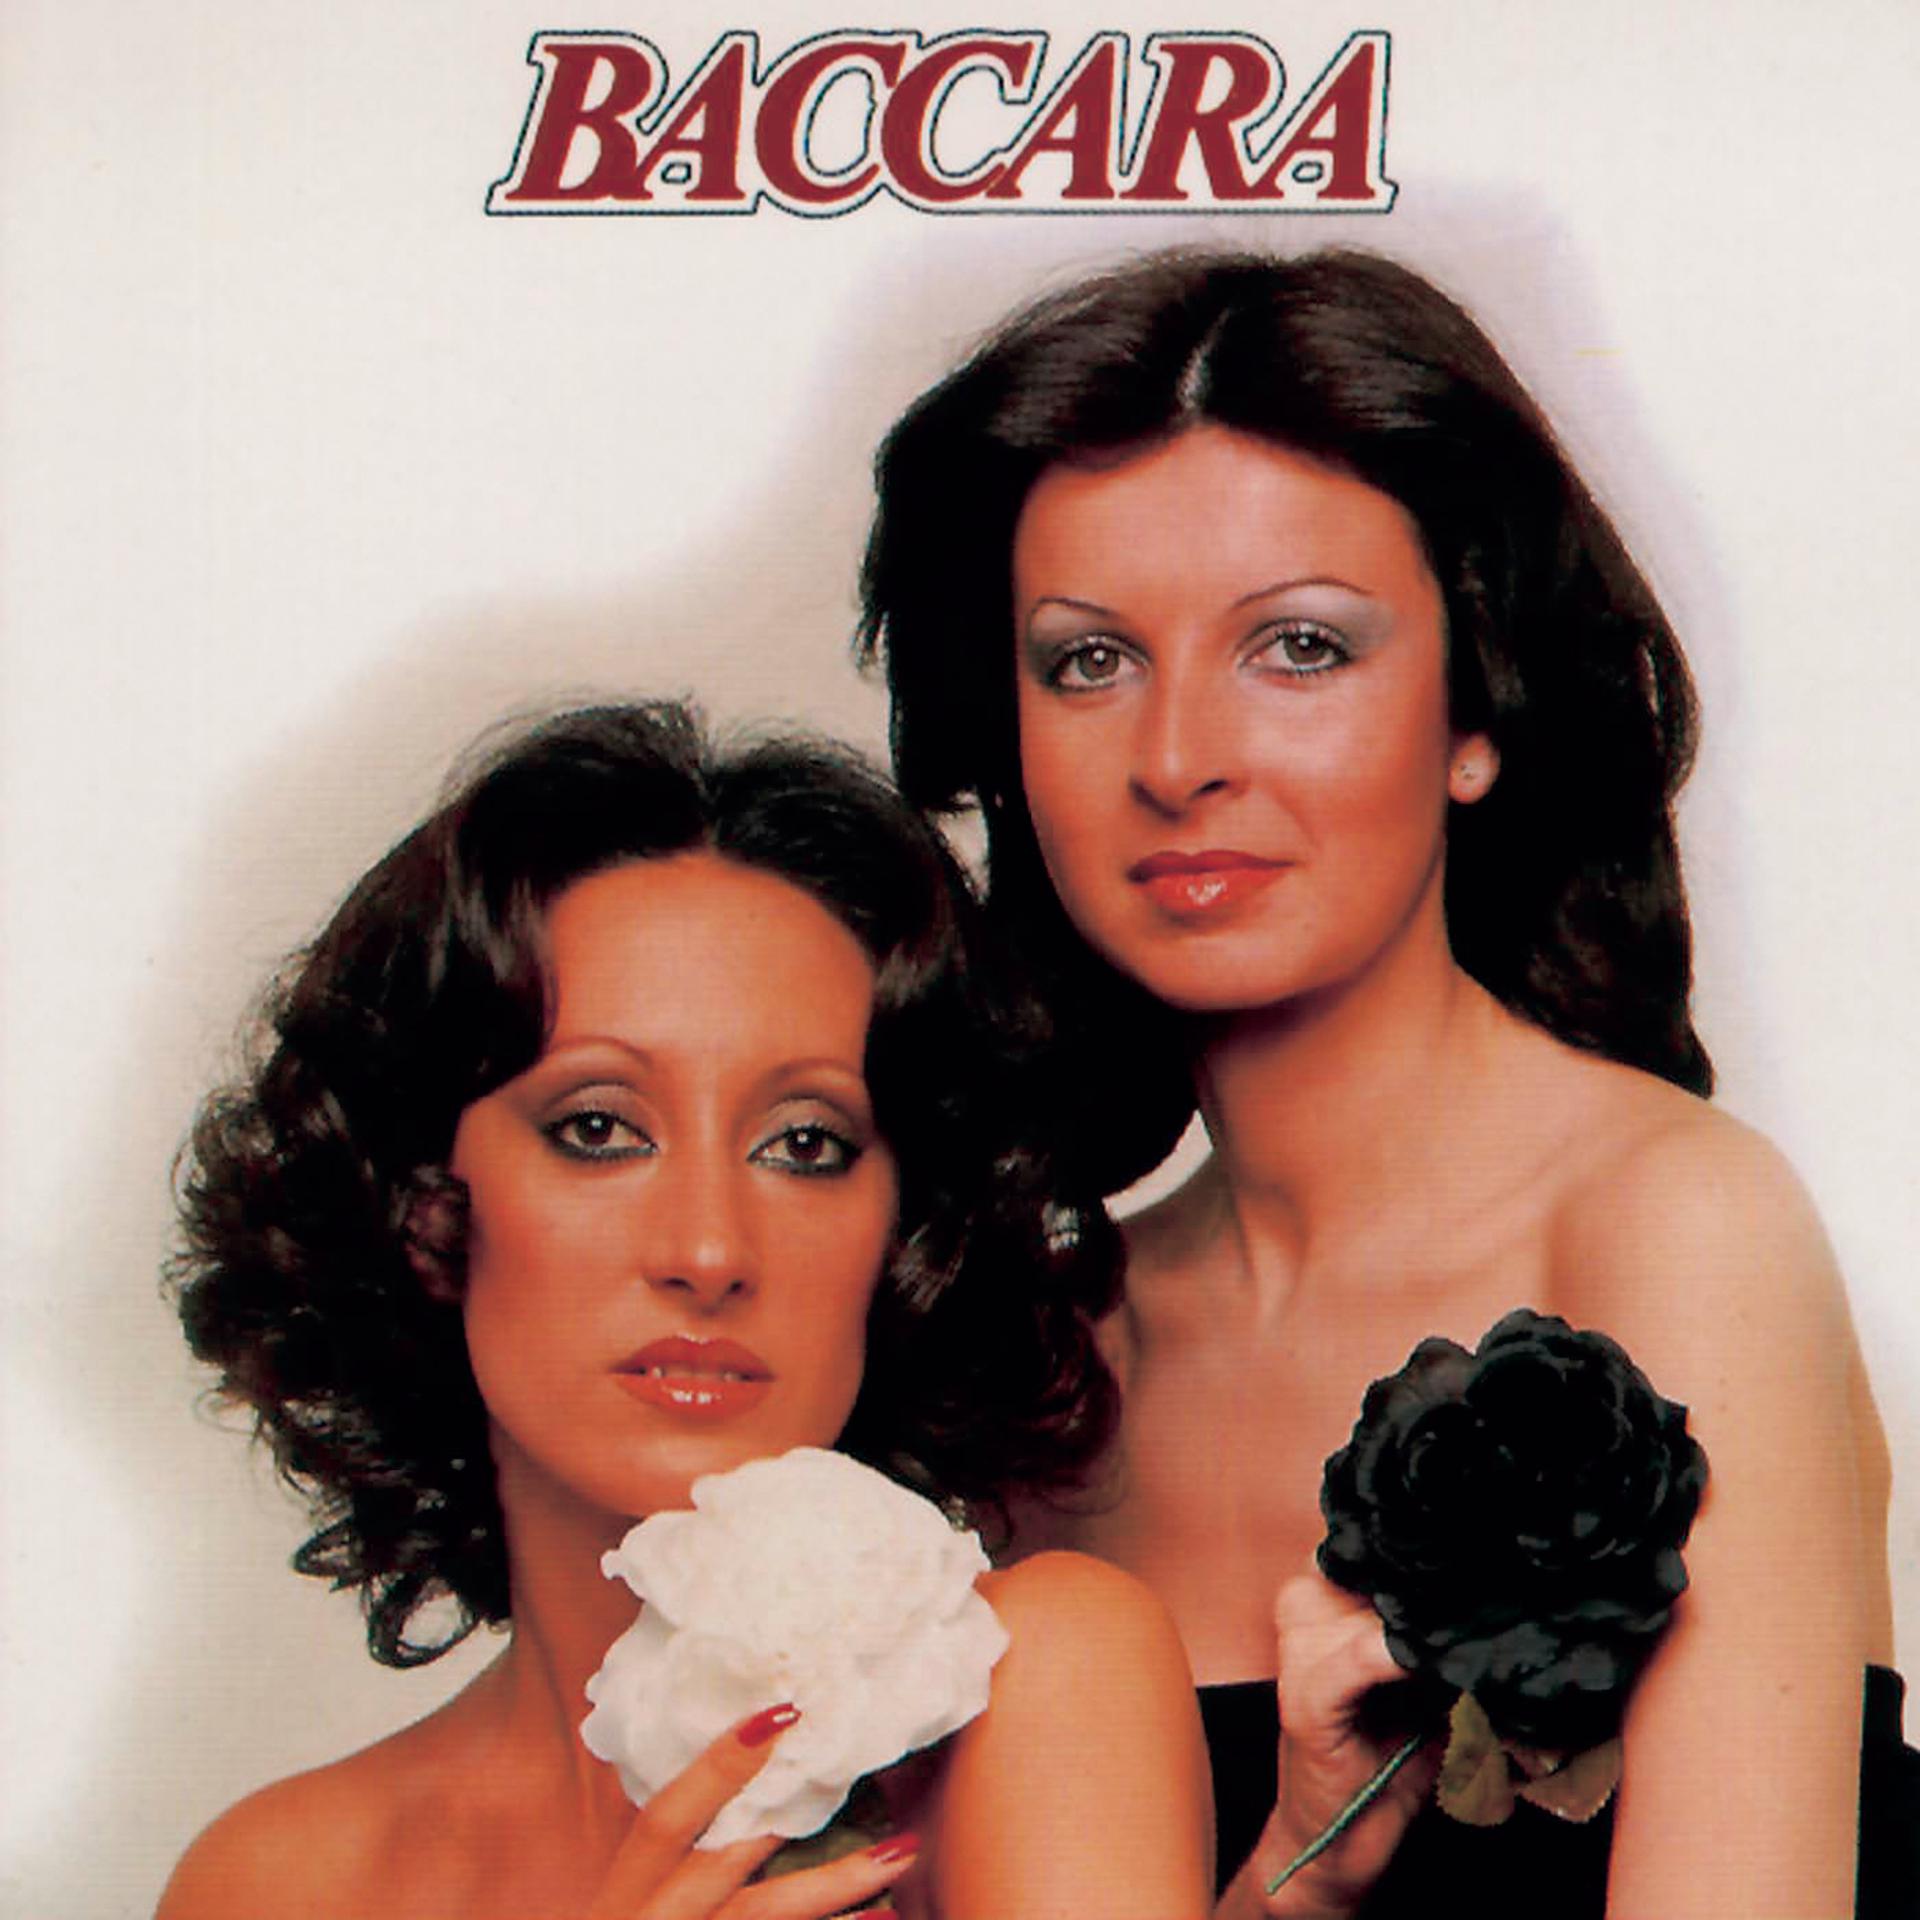 Баккара видео. Группа Baccara. Группа Baccara 1978. Группа баккара в молодости.